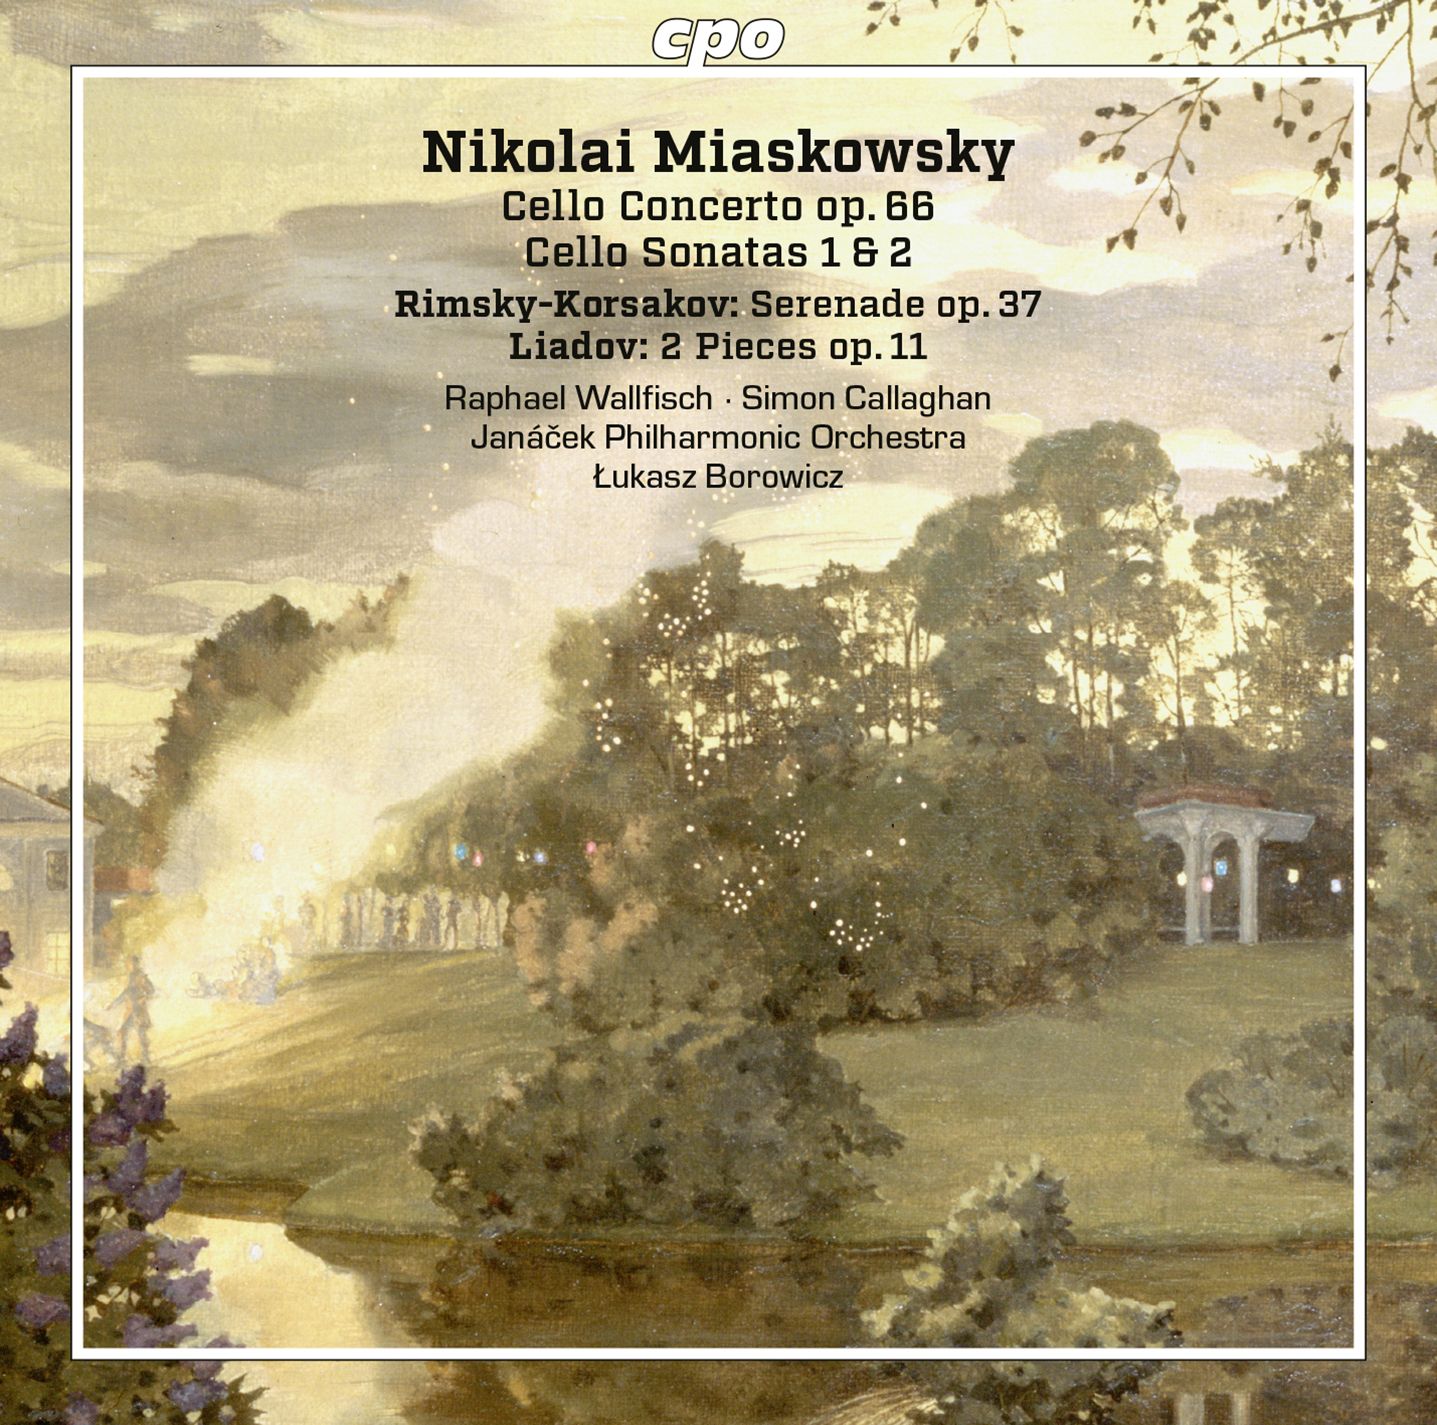 Miaskovsky Cello Concerto & Sonatas - plus Liadov and Rimsky!